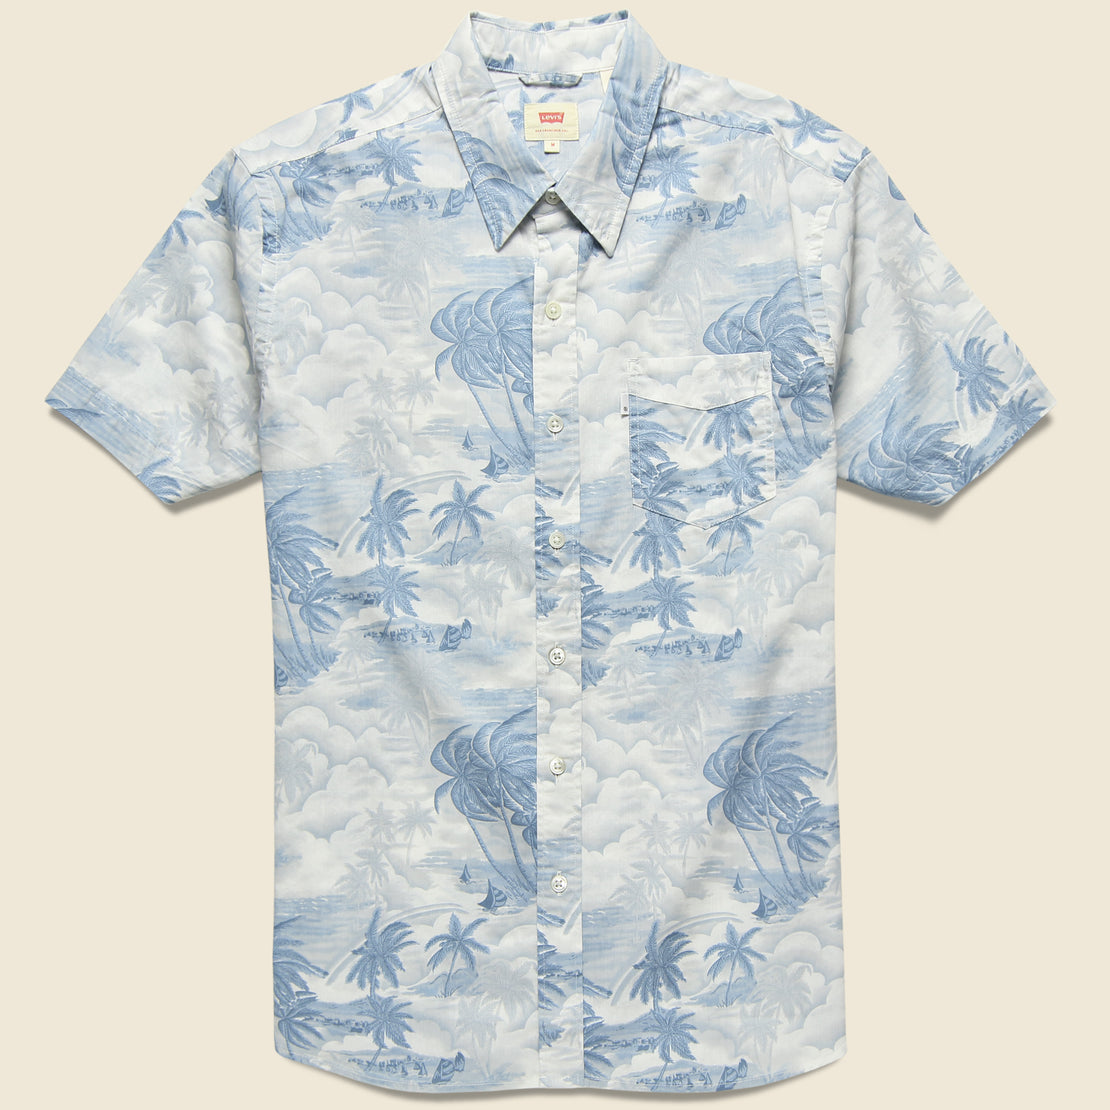 Levis Premium Sunset Pocket Shirt - Acid Hawaiian Dusty Blue